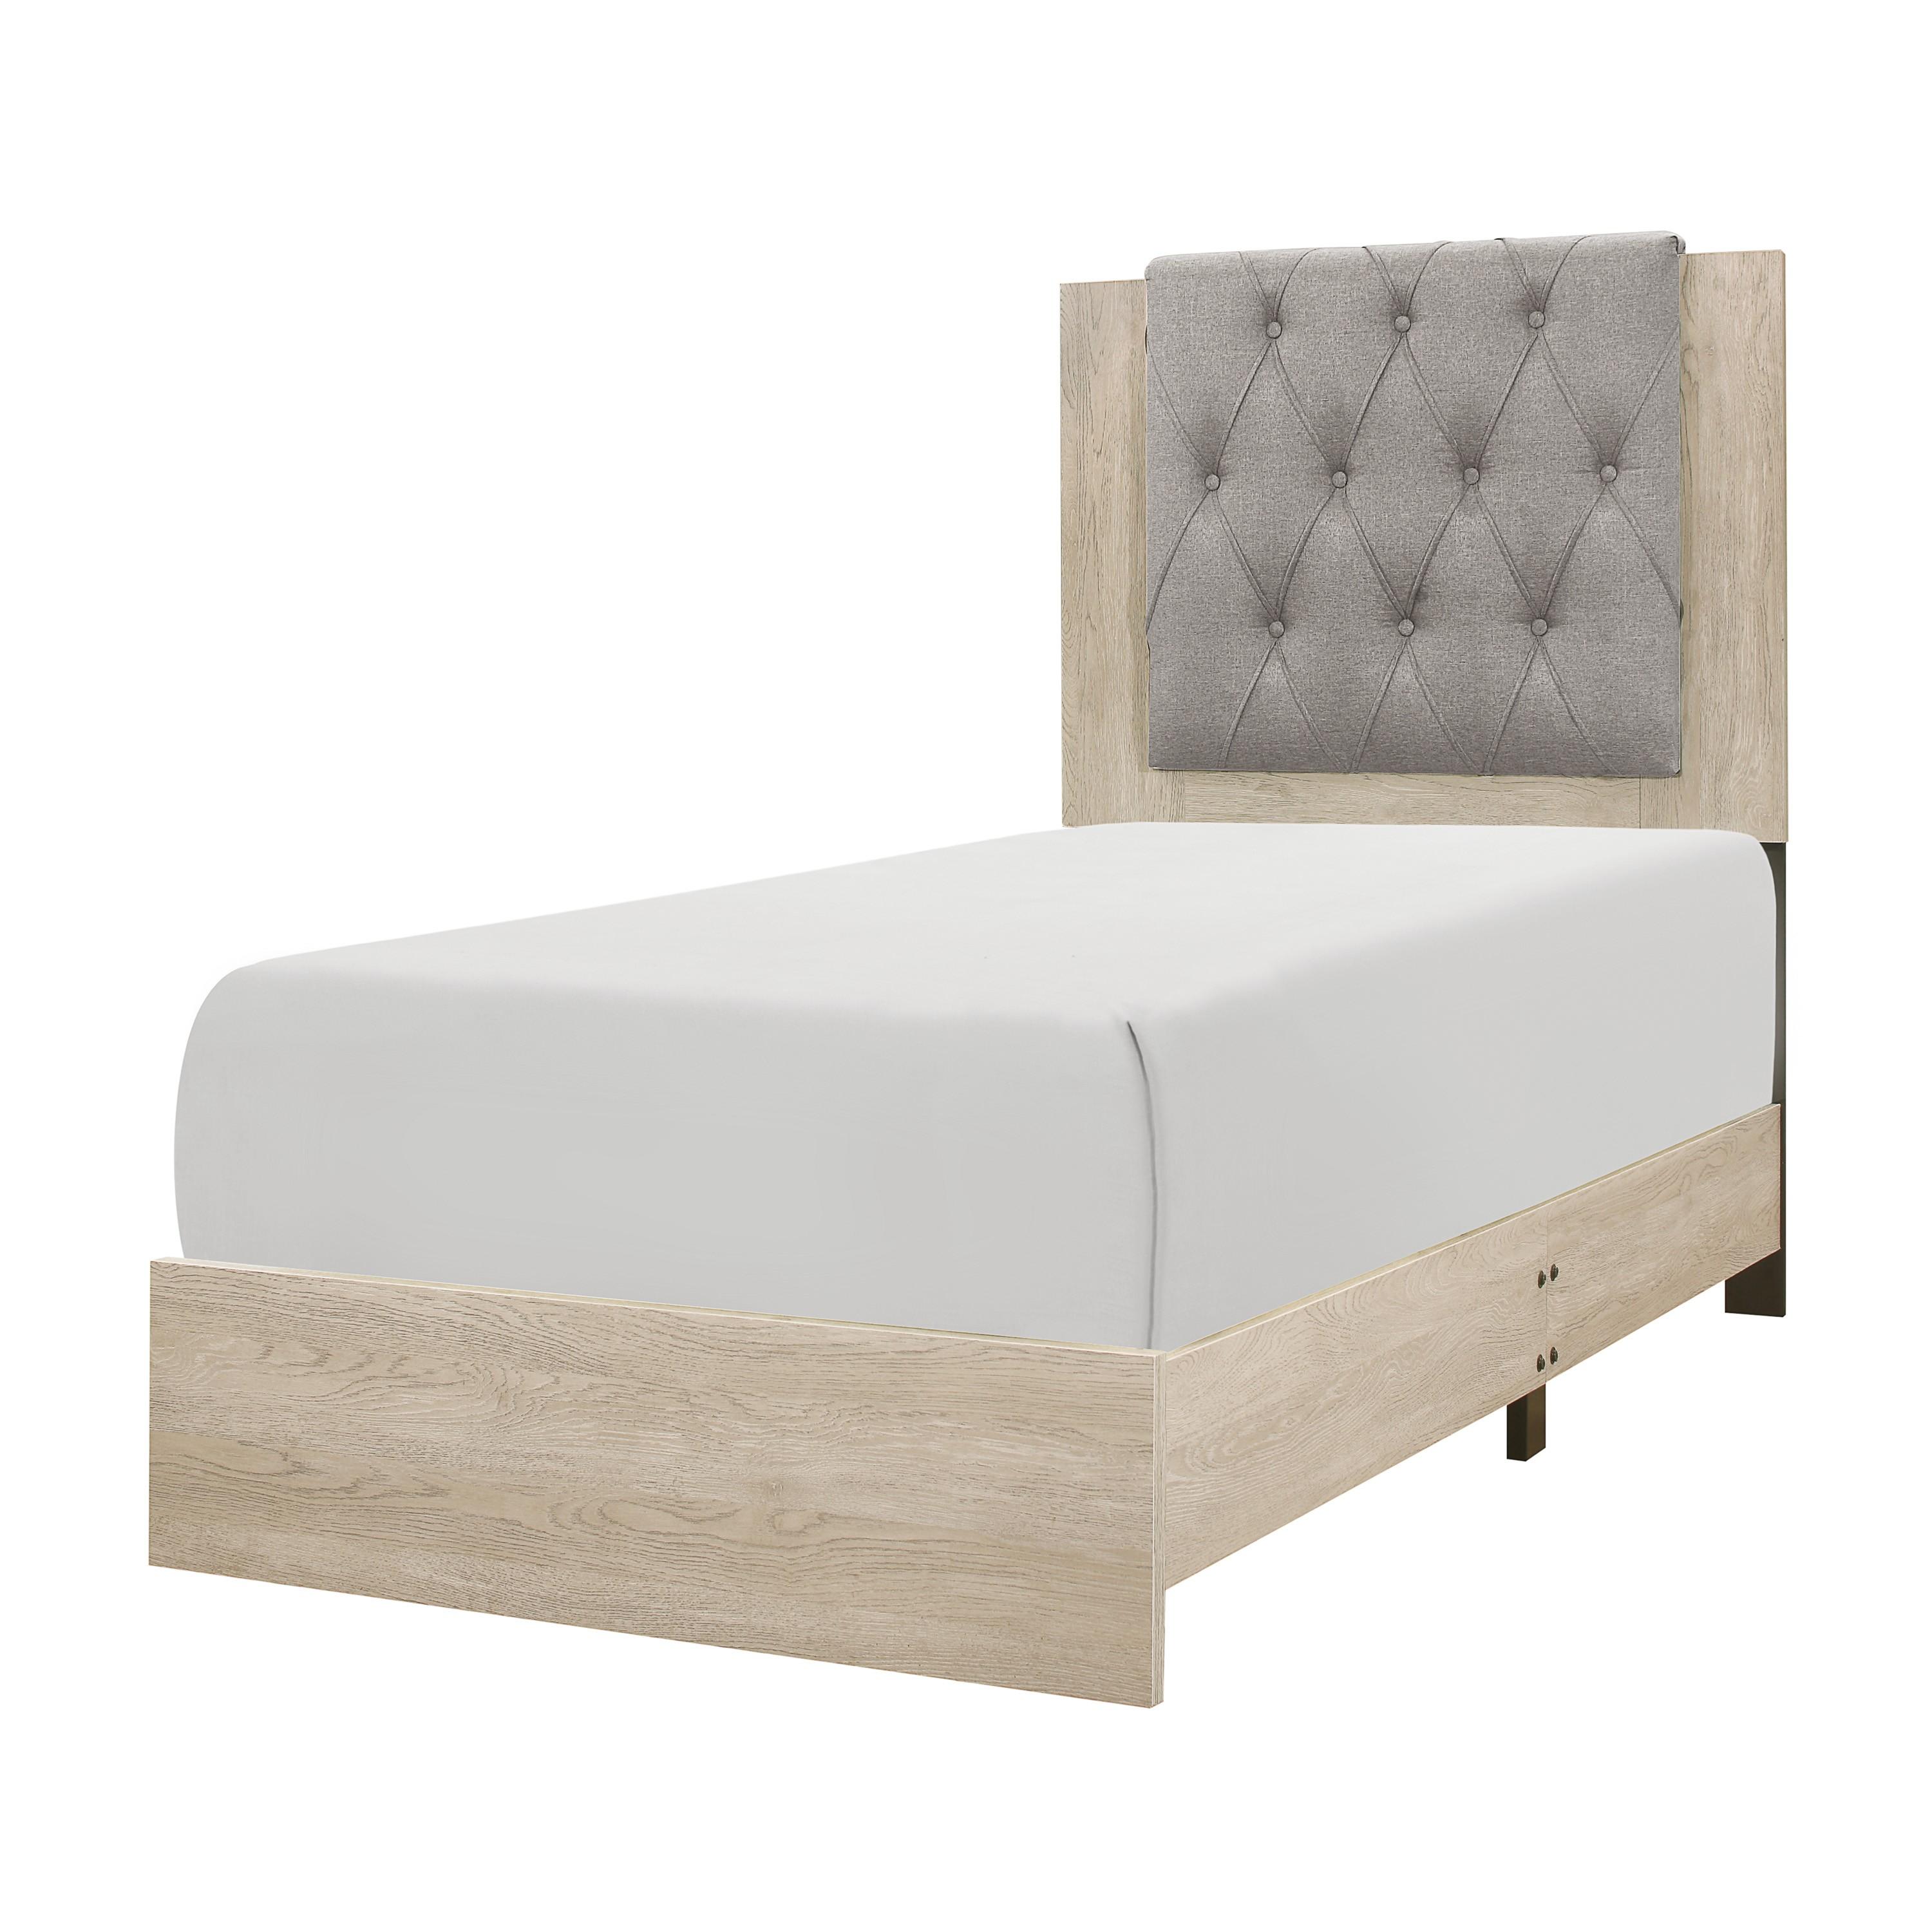 

    
Modern Cream Wood Twin Bedroom Set 3pcs Homelegance 1524T-1 Whiting
